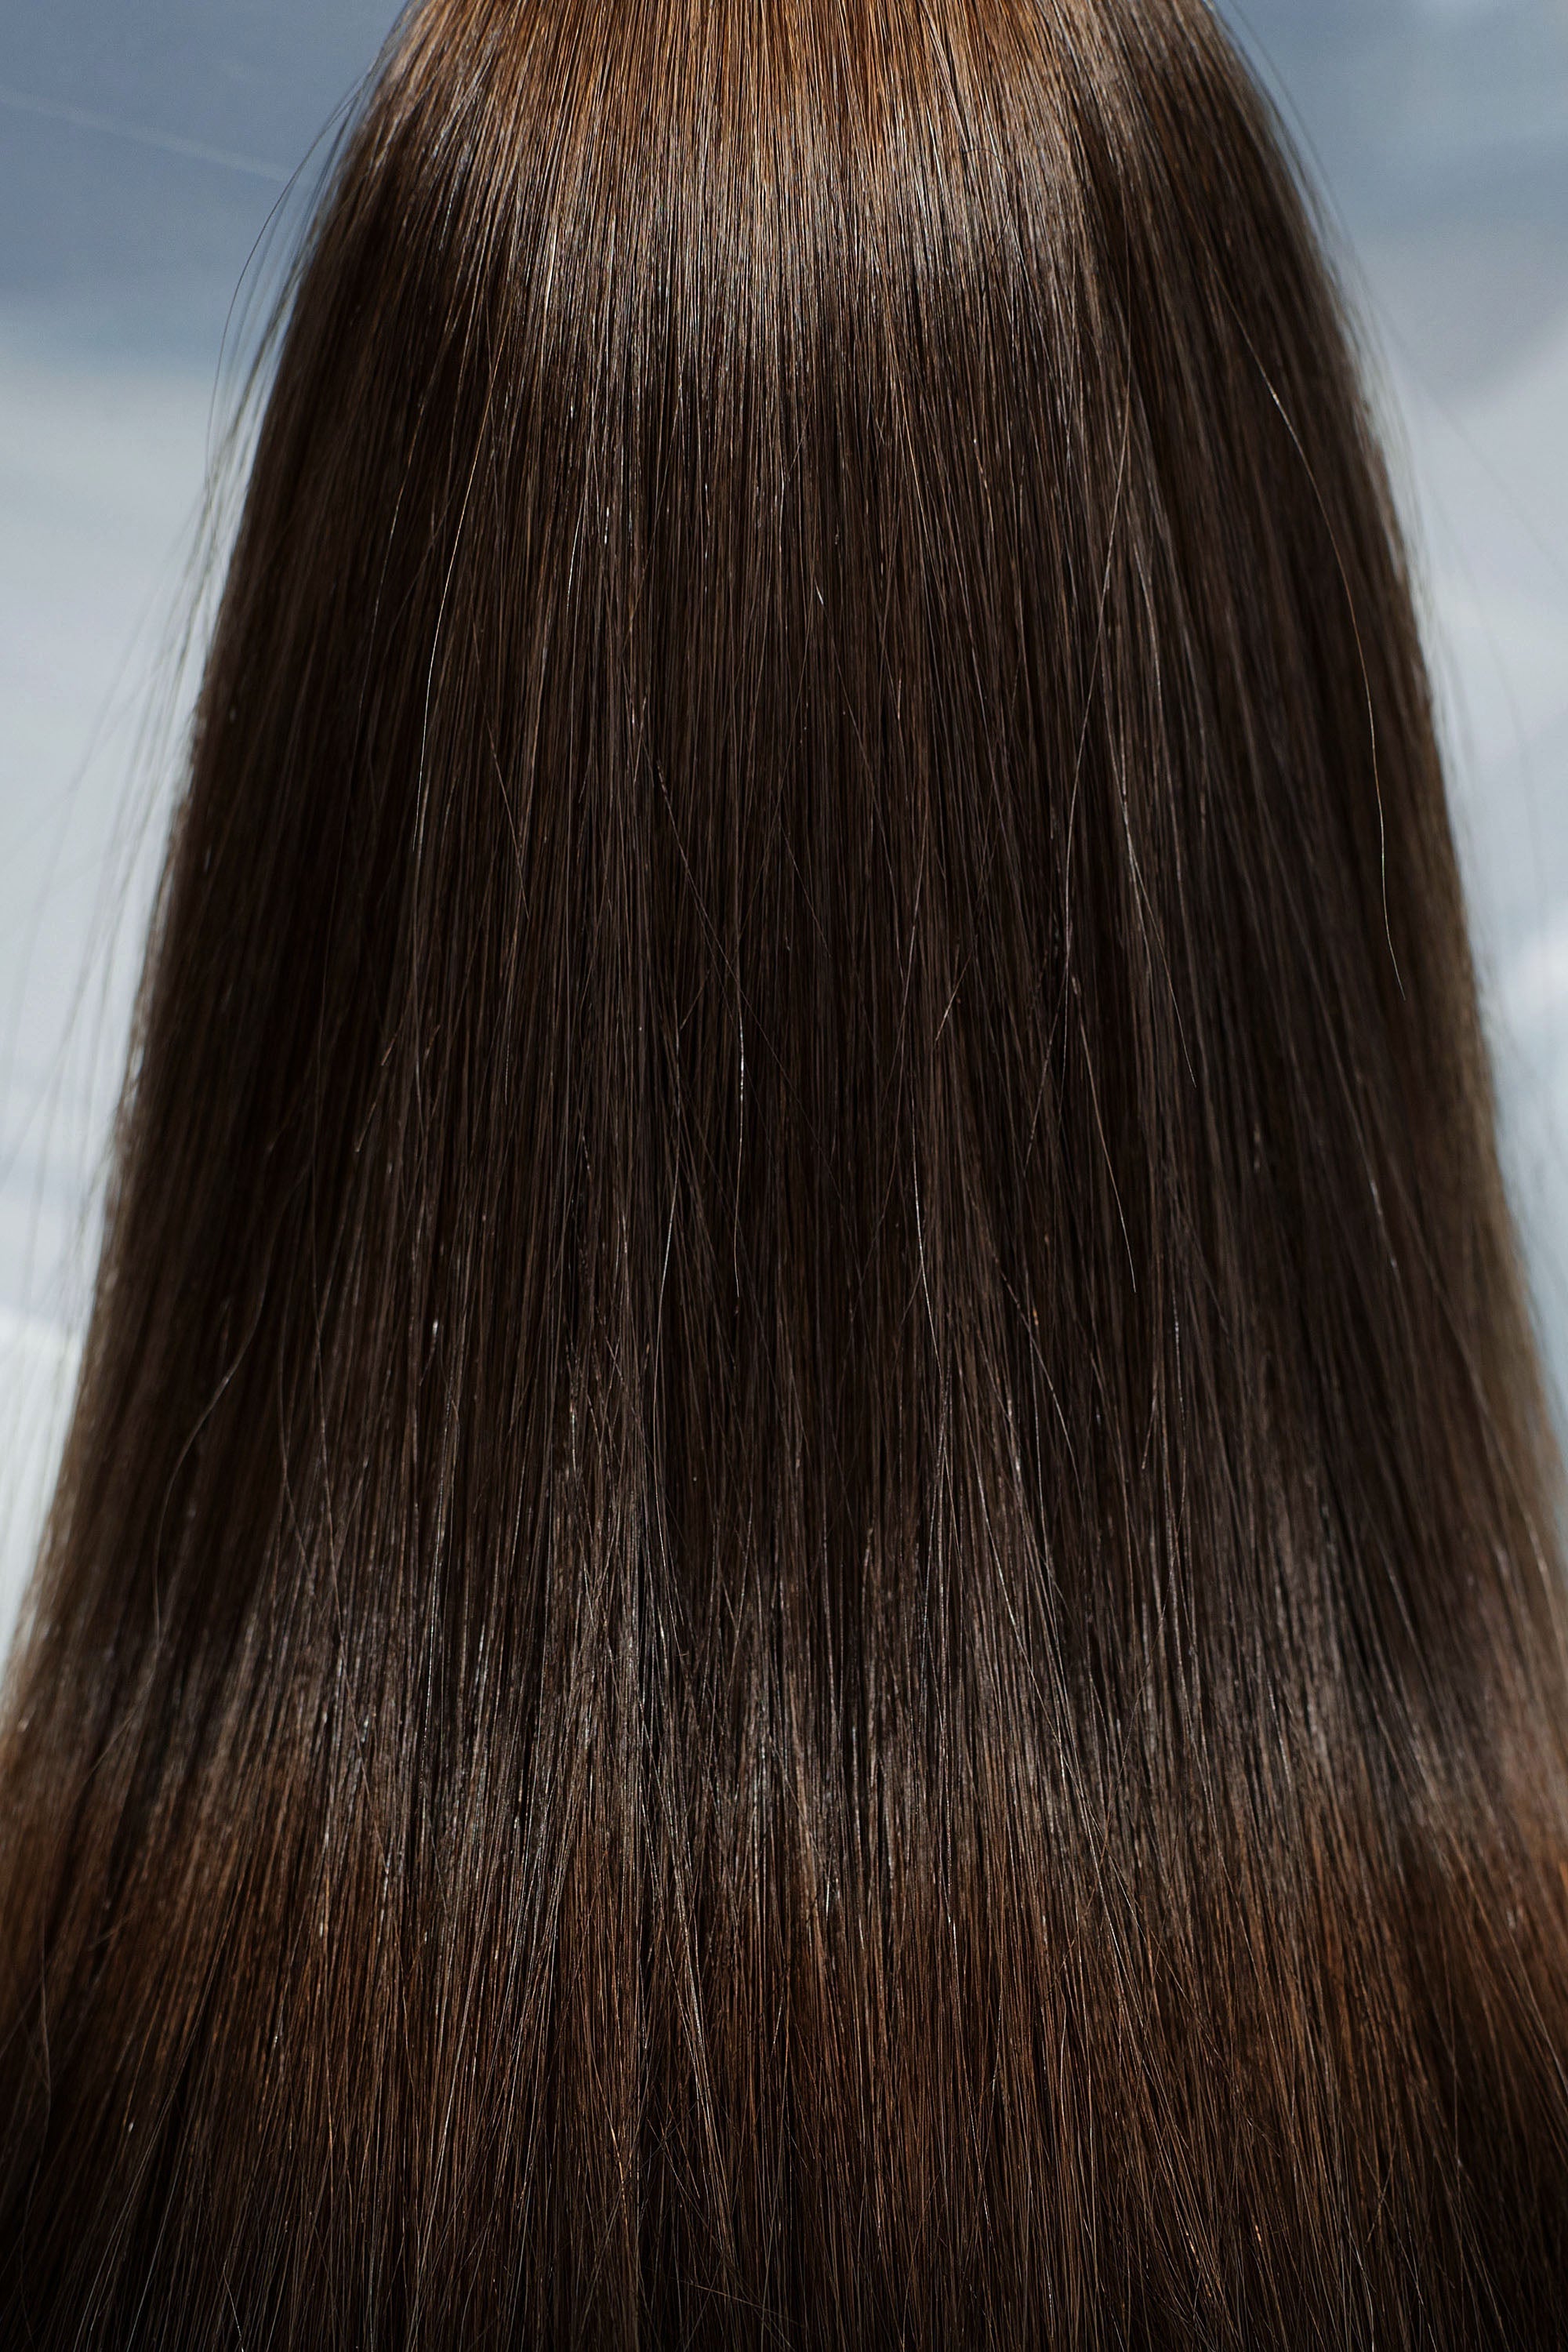 Behair professional Keratin Tip "Premium" 26" (65cm) Natural Straight Light Brown #4 - 25g (Standart - 0.7g each pcs) hair extensions